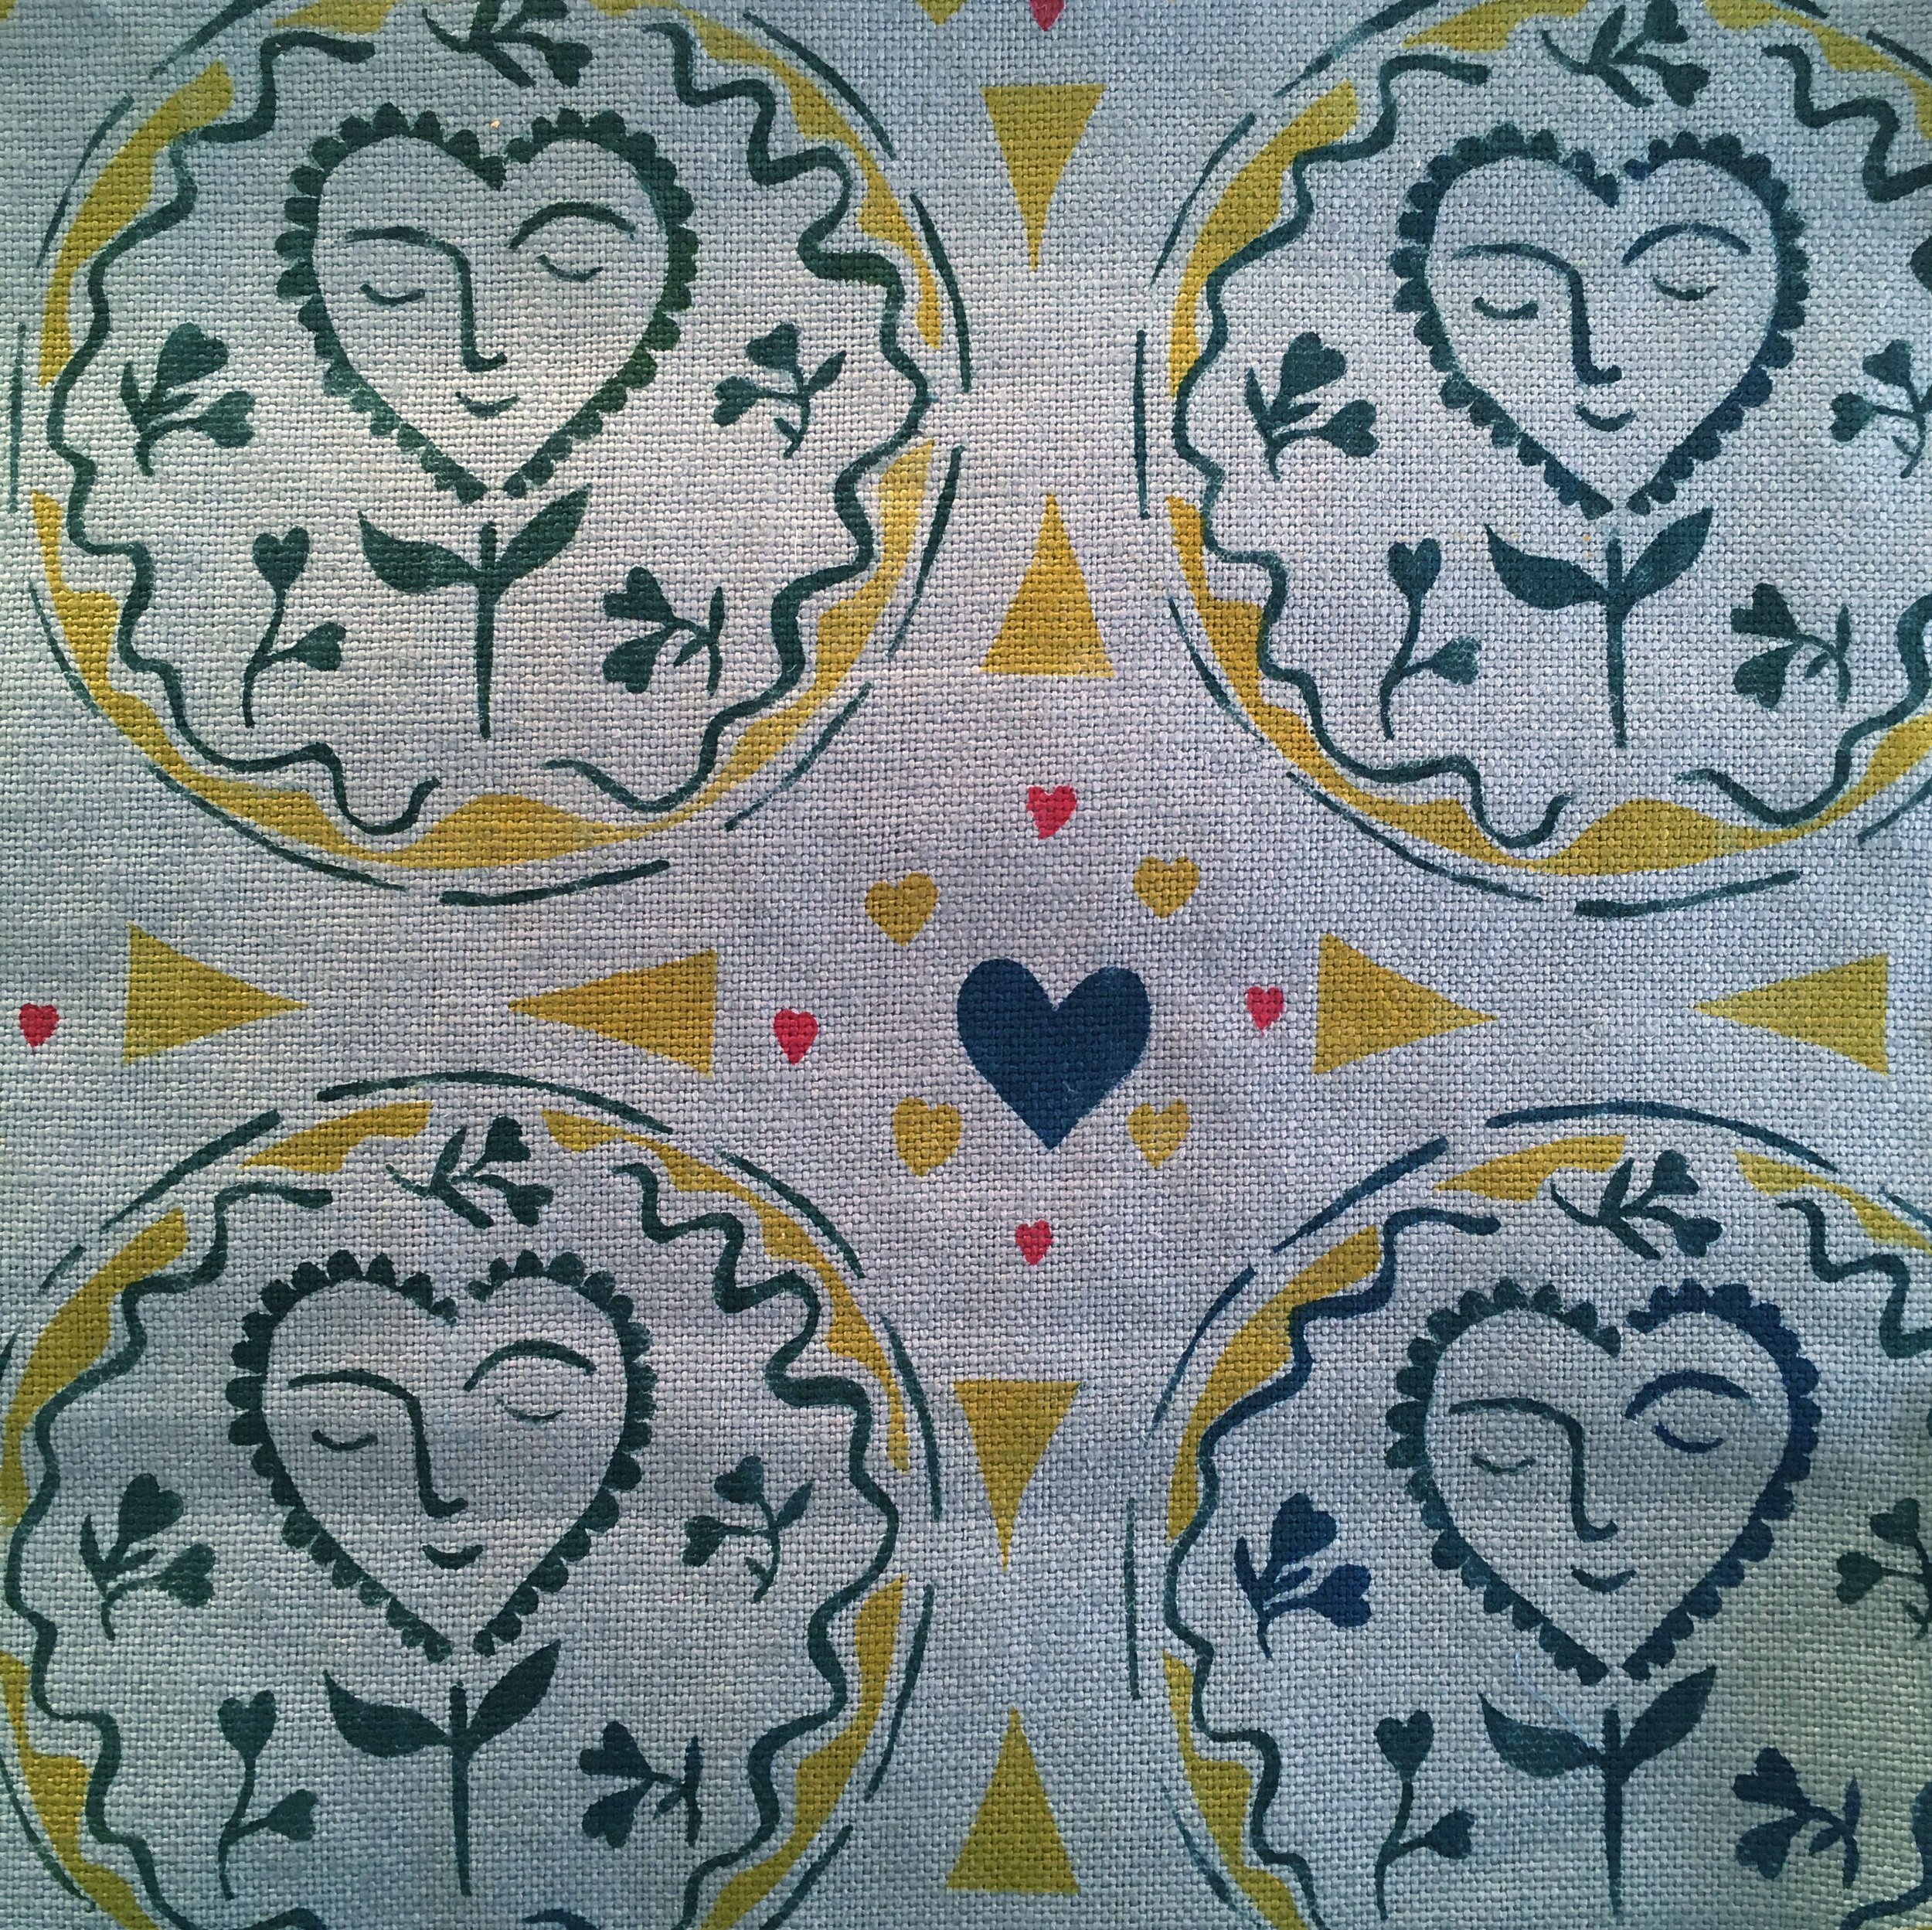 little heart flower vanessa stone prnted textiles.jpeg